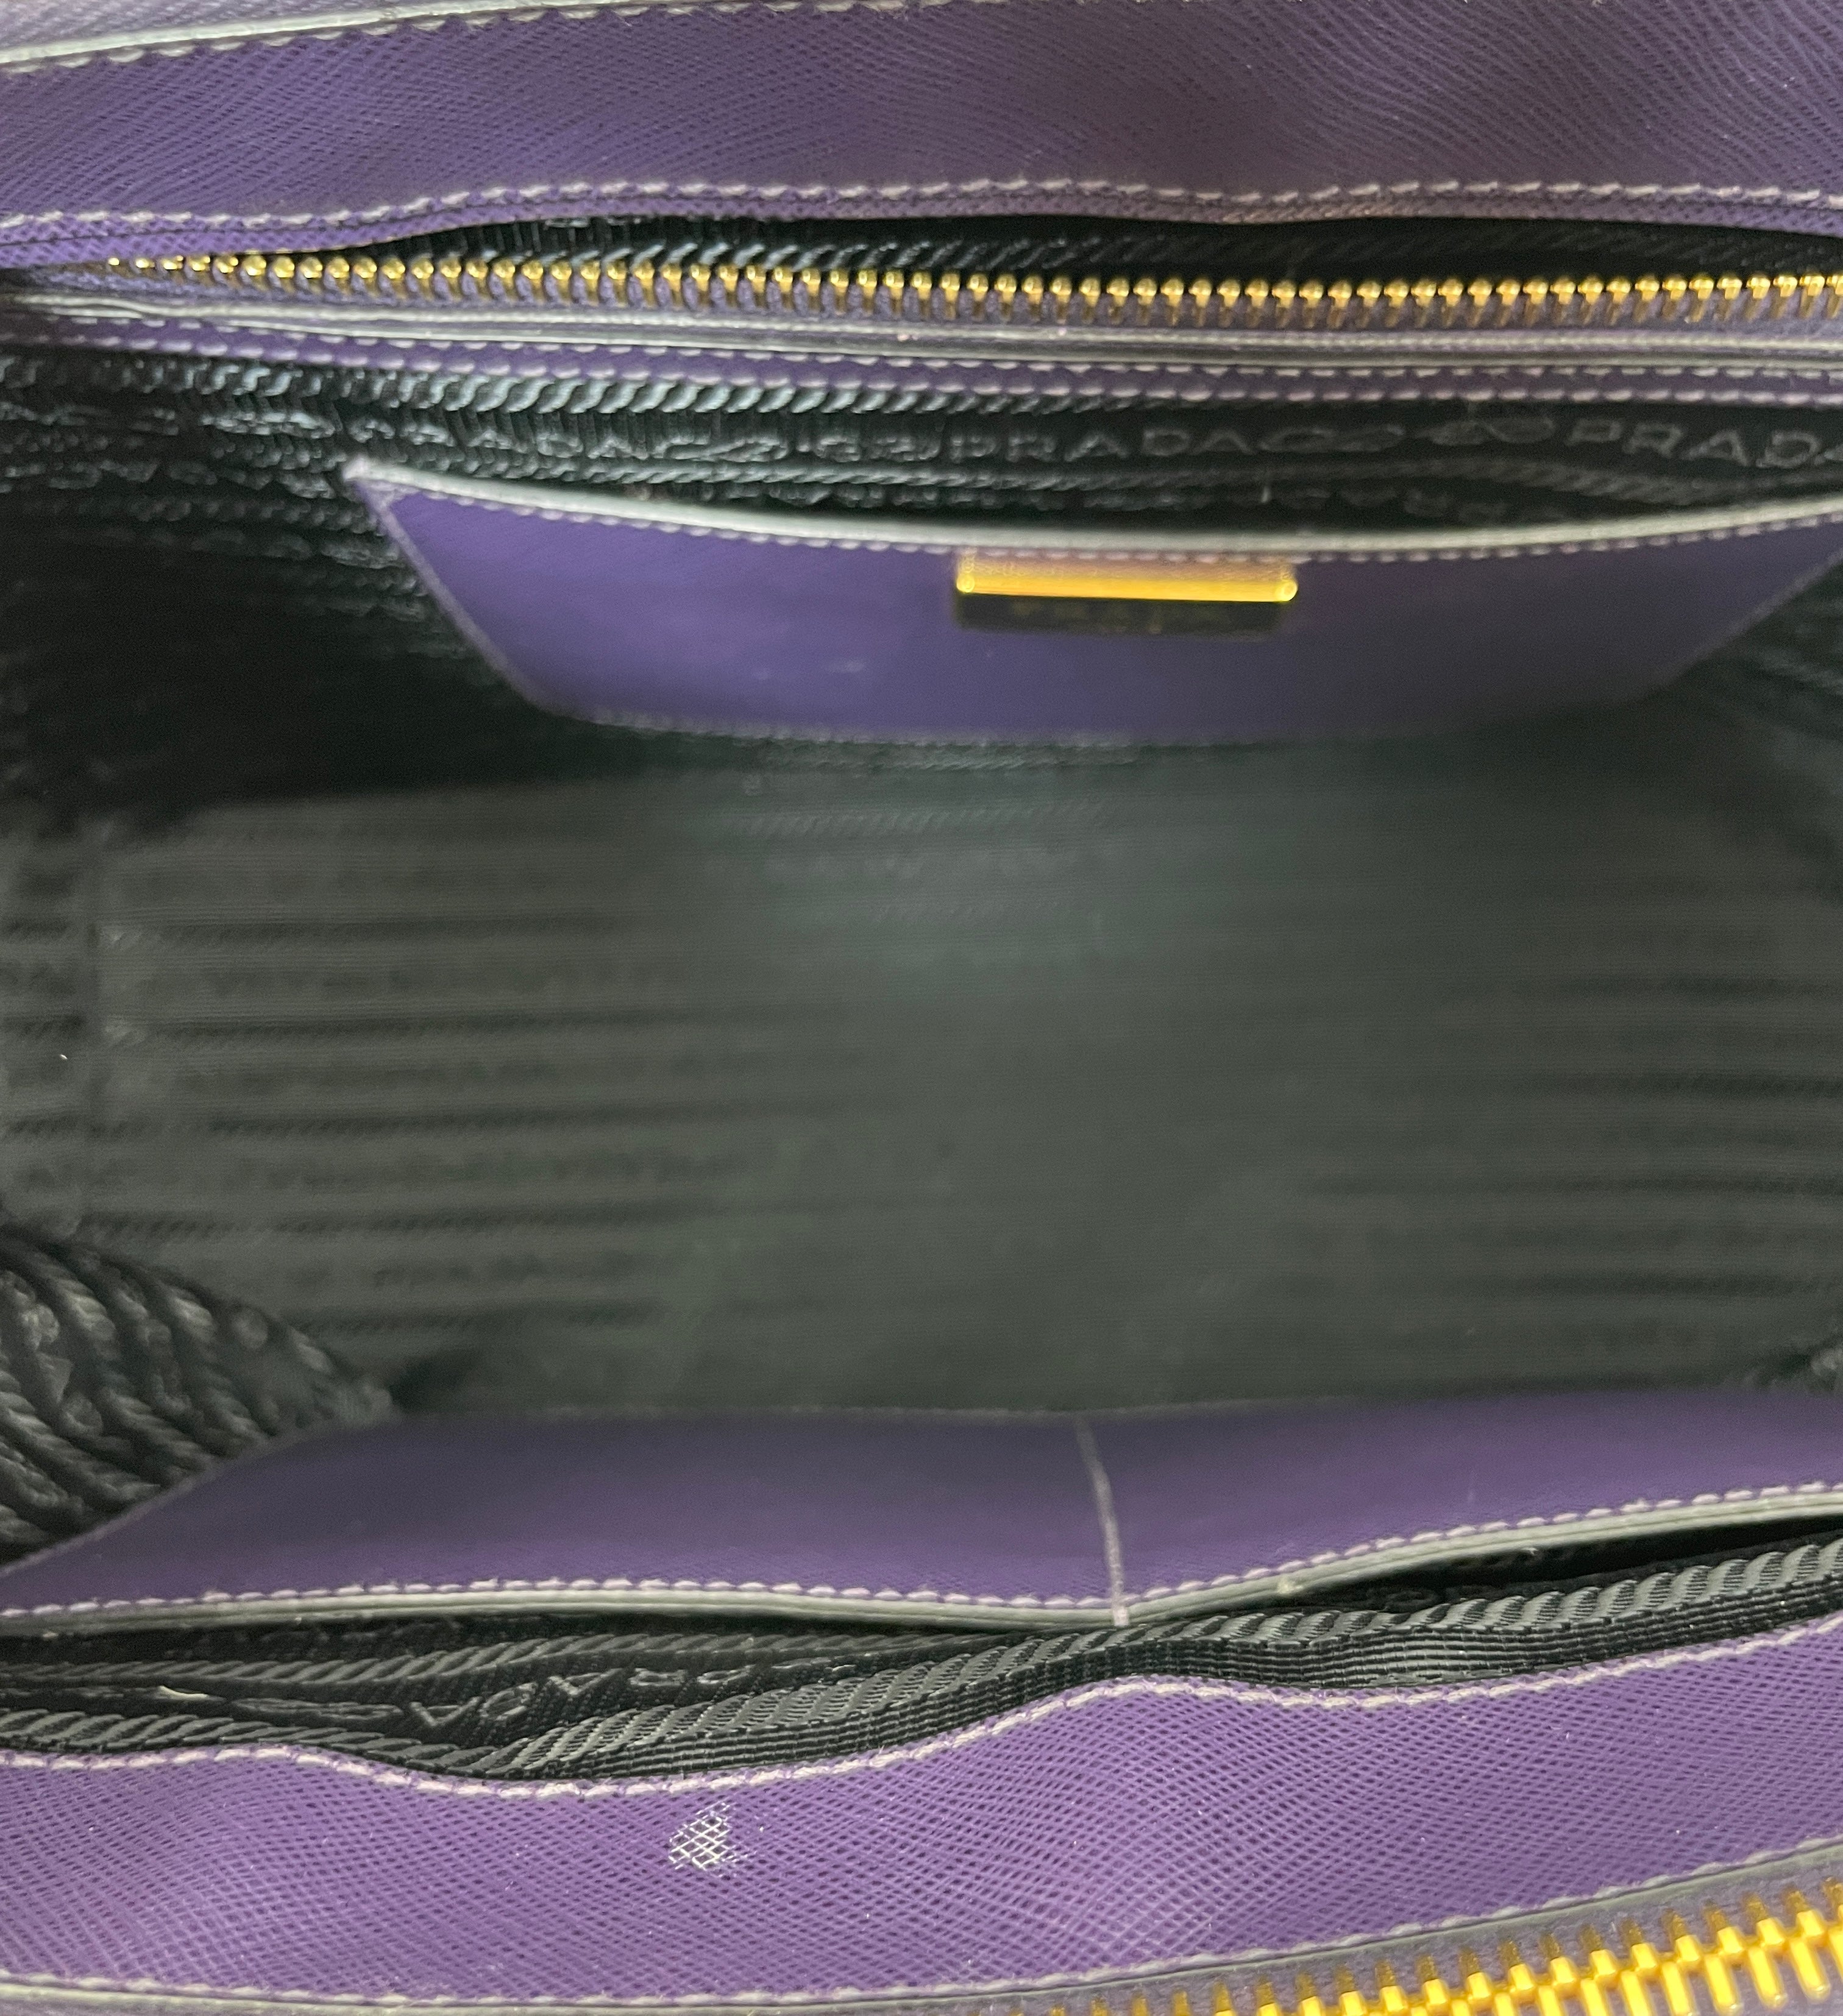 Prada Saffiano Two Way and Two Tone Purple/Black Handbag Used (6631)